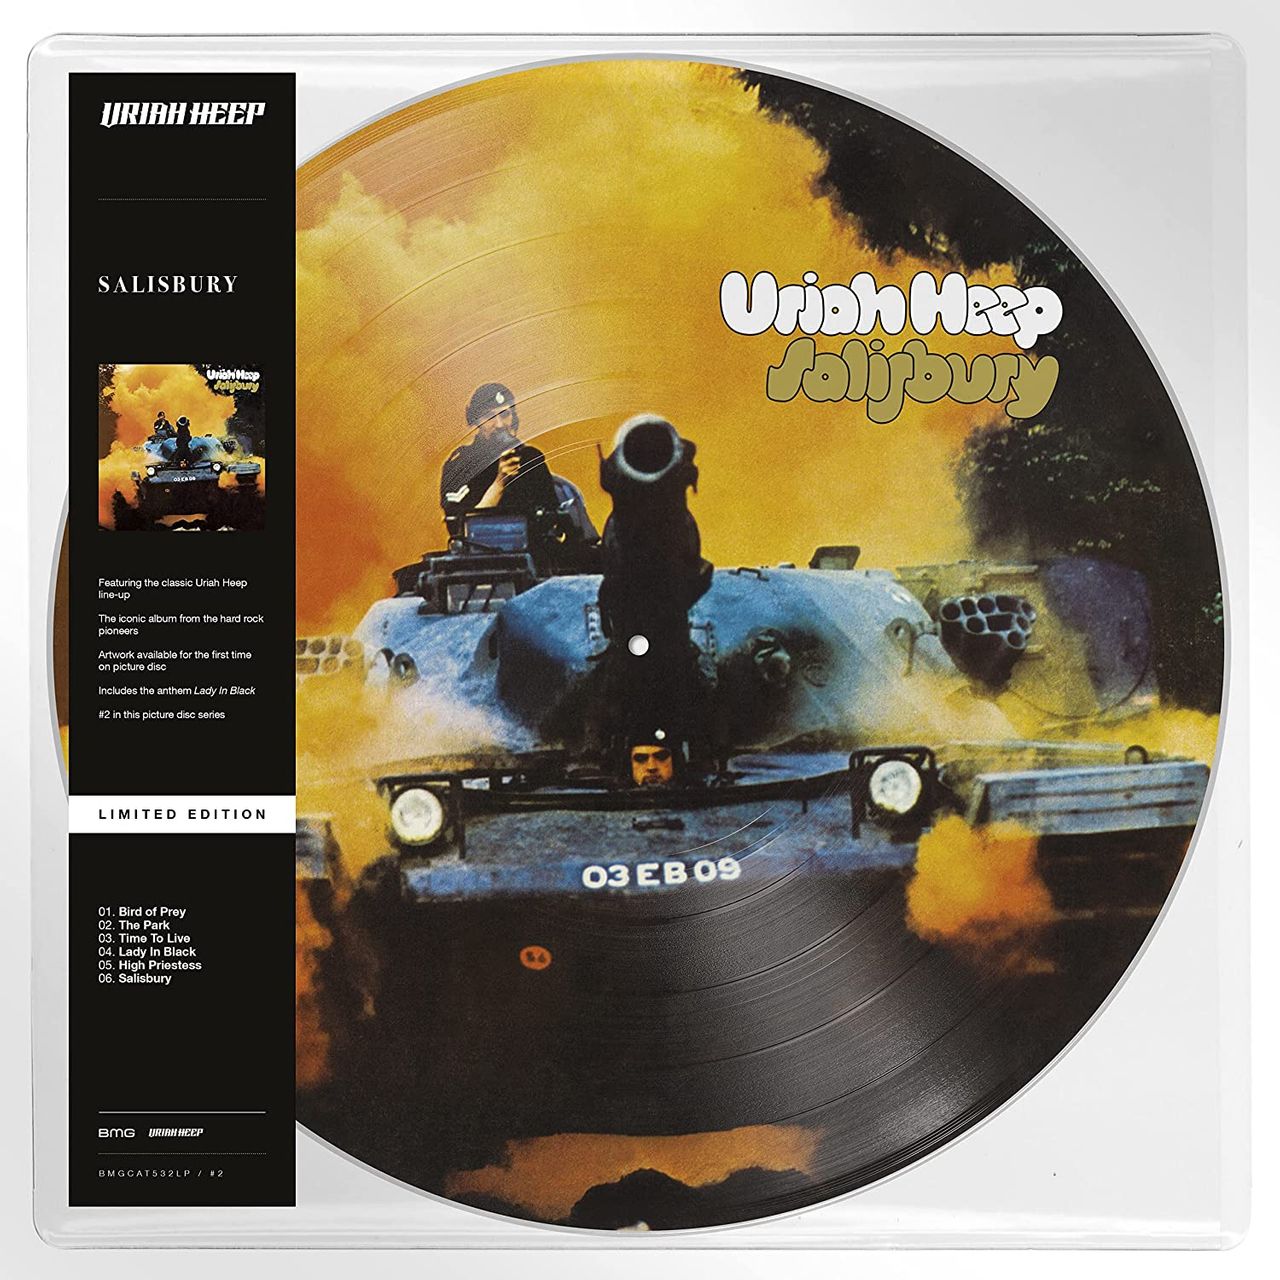 Uriah Heep Salisbury UK picture disc LP (vinyl picture disc album) BMGCAT532LP/#2